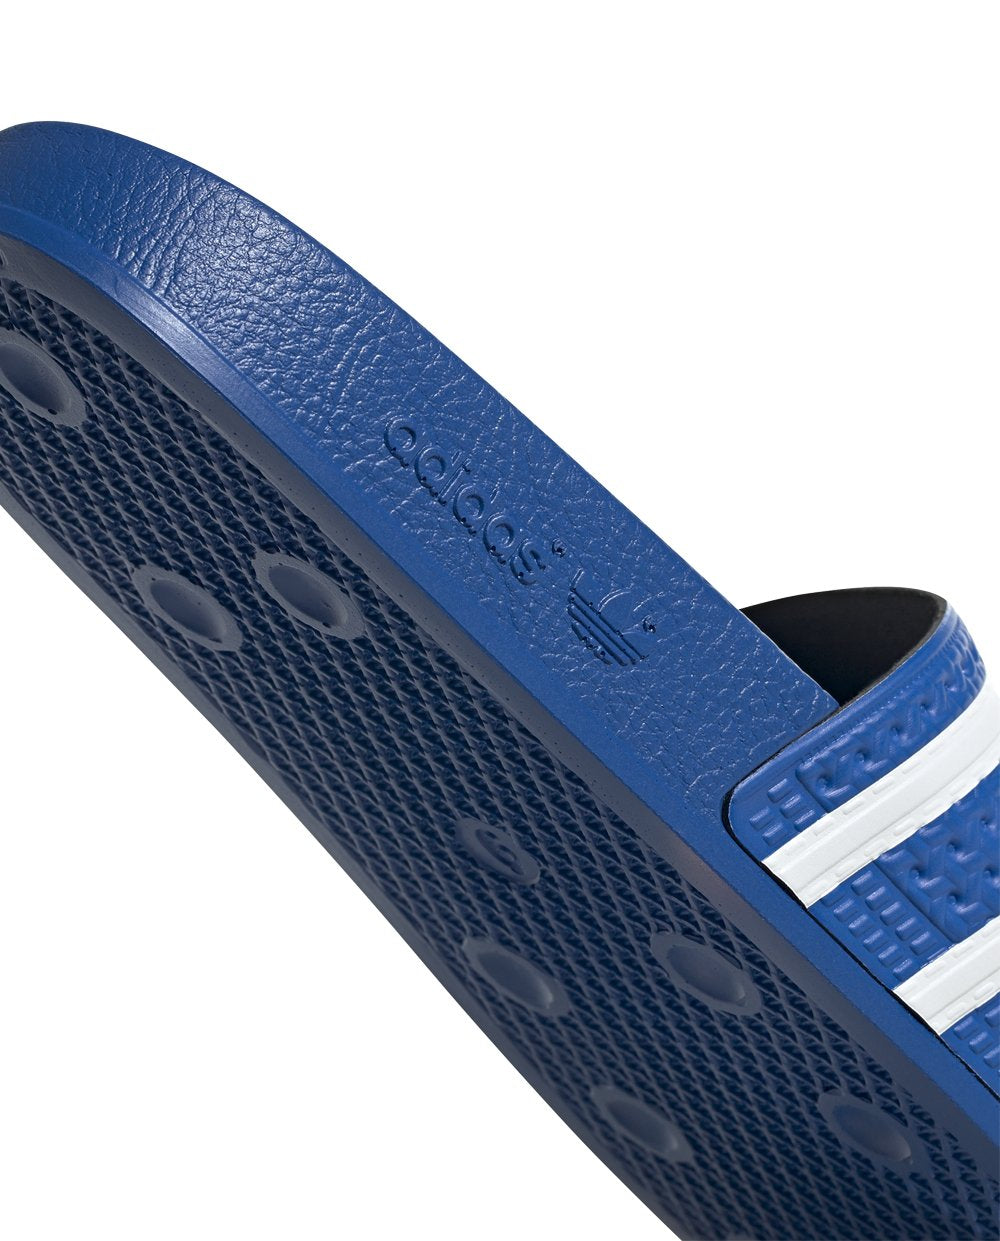 Adidas Adilette Blue and White